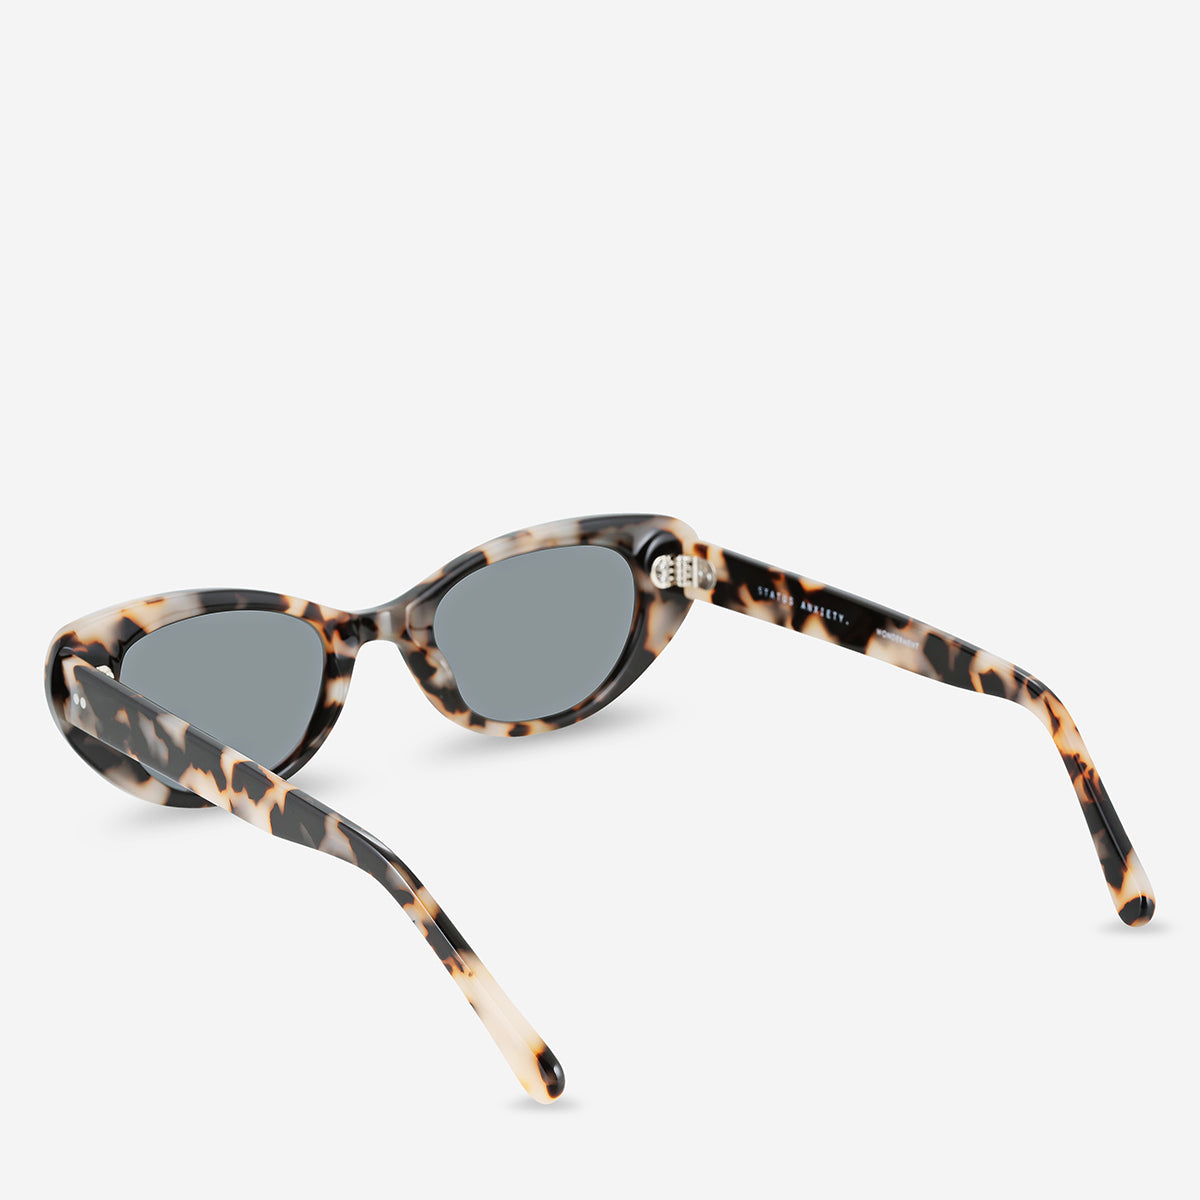 Wonderment Sunglasses in White Tort